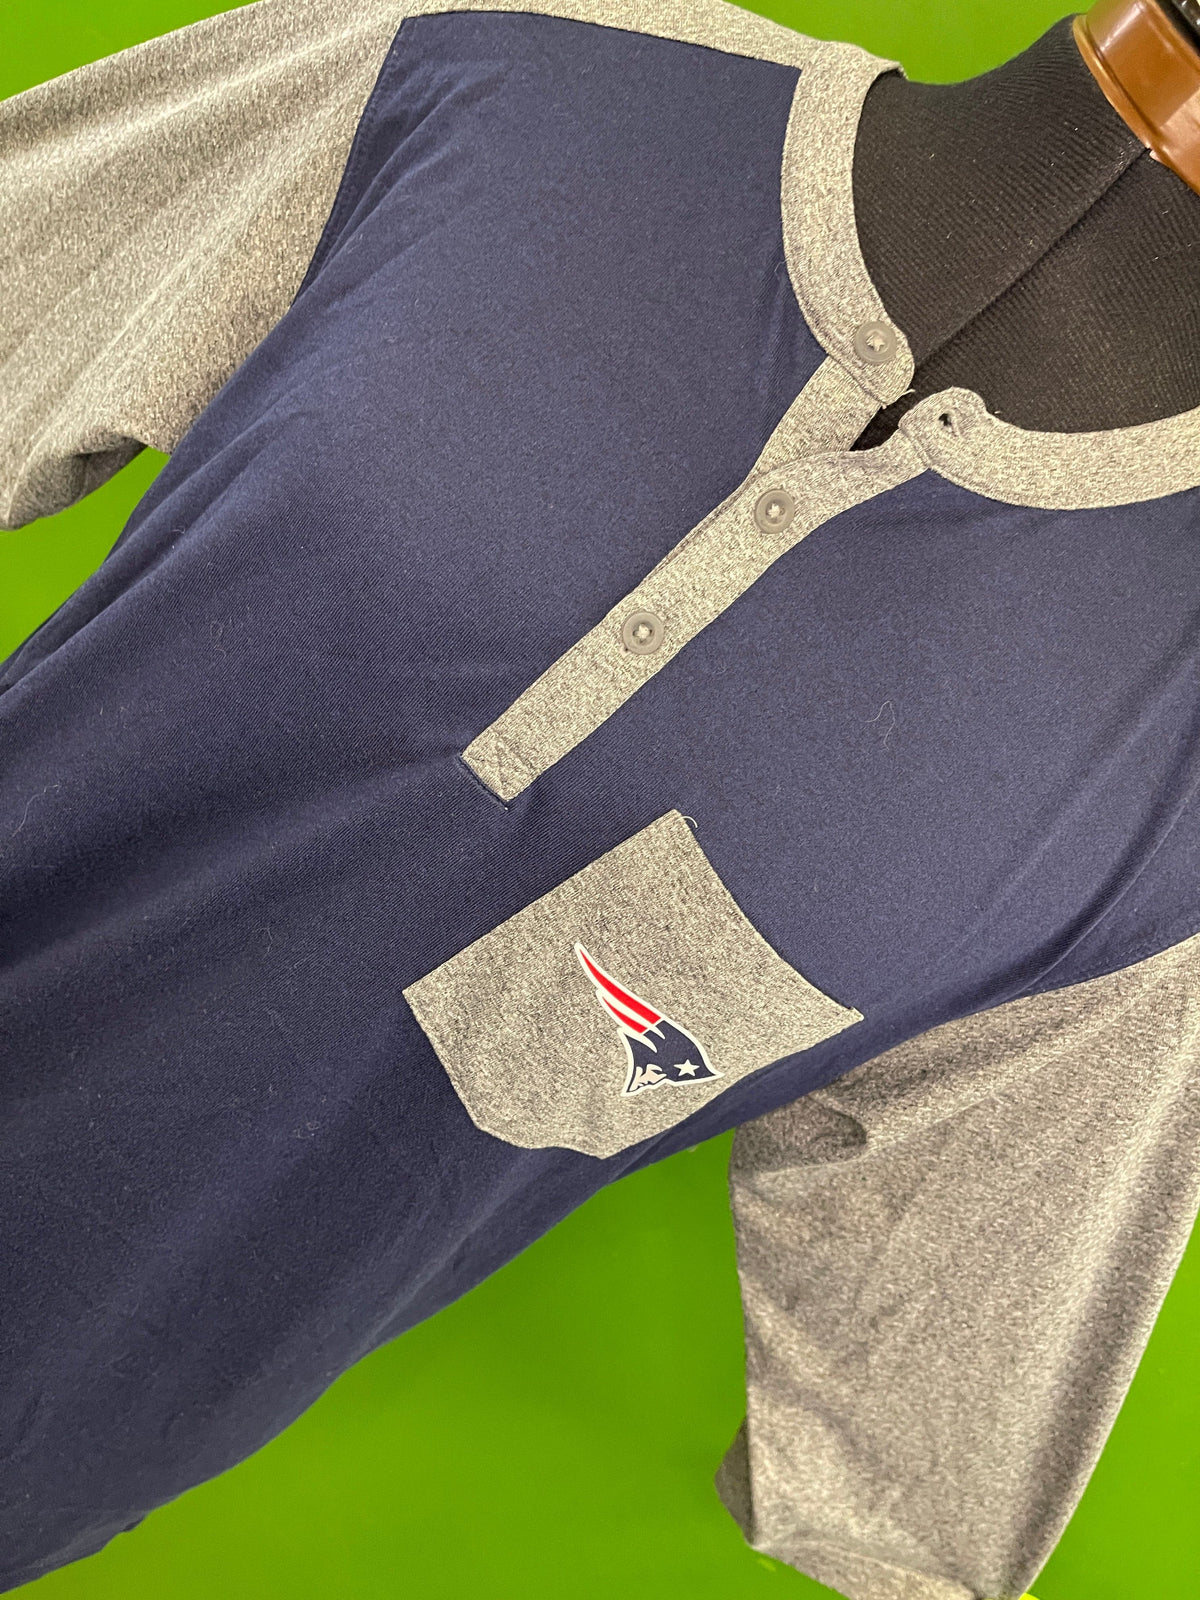 NFL New England Patriots Dri-Fit Henley 3/4 Sleeve T-Shirt Men's Small